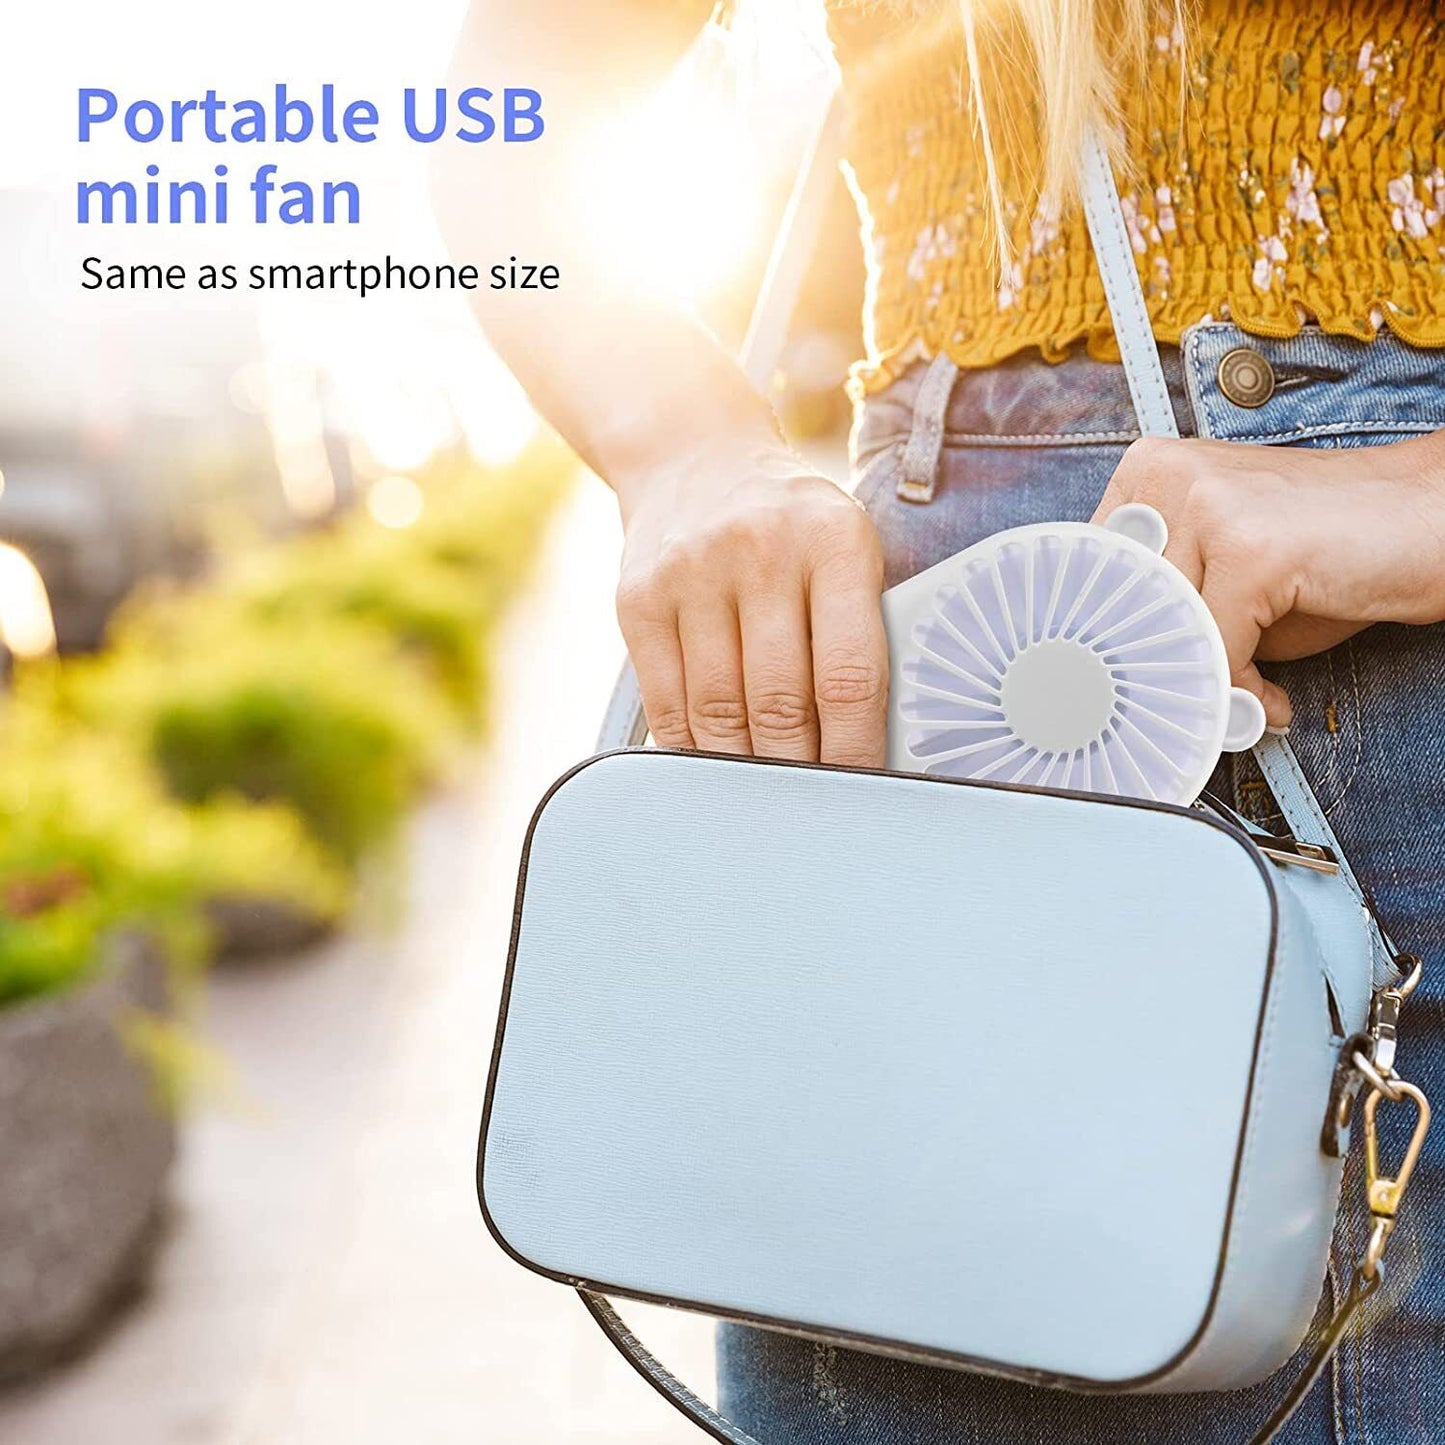 Handheld Mini USB Fan, Portable USB Pocket Fan Rechargeable with Holder, 3 Speed